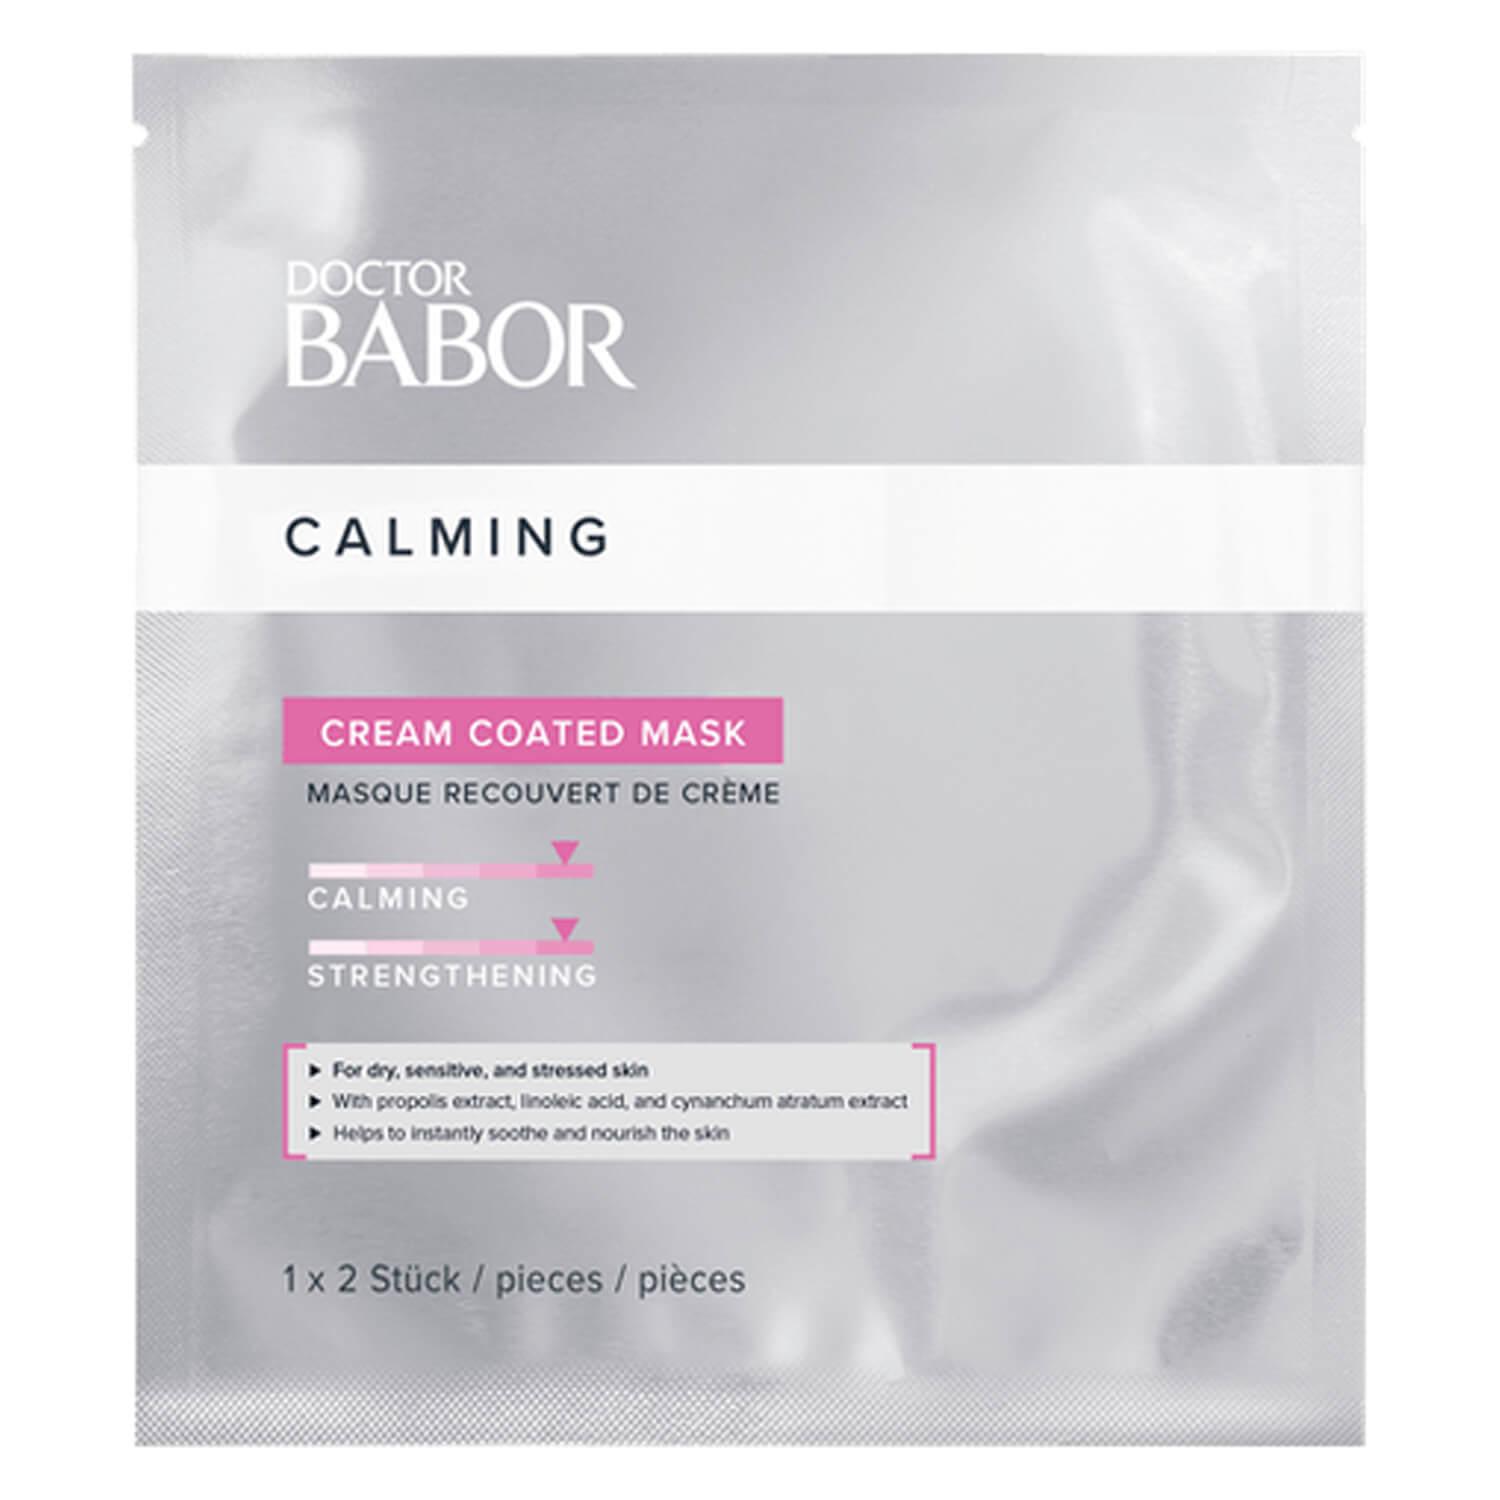 DOCTOR BABOR - Cream Coated Mask